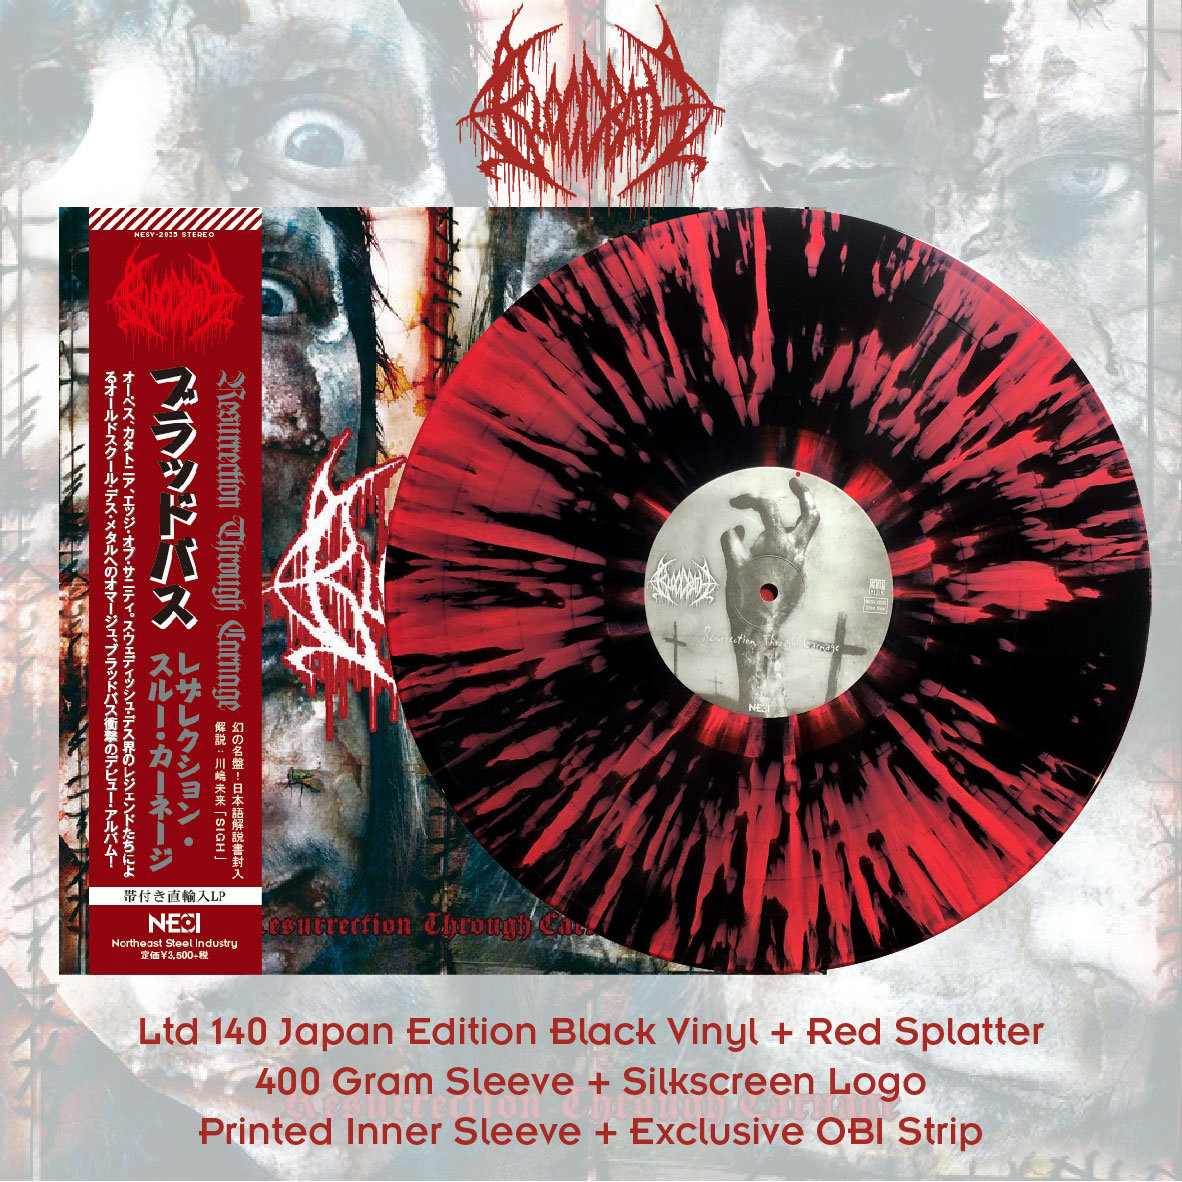 BLOODBATH - Resurrection Through Carnage Ltd 100 lack Vinyl + Re